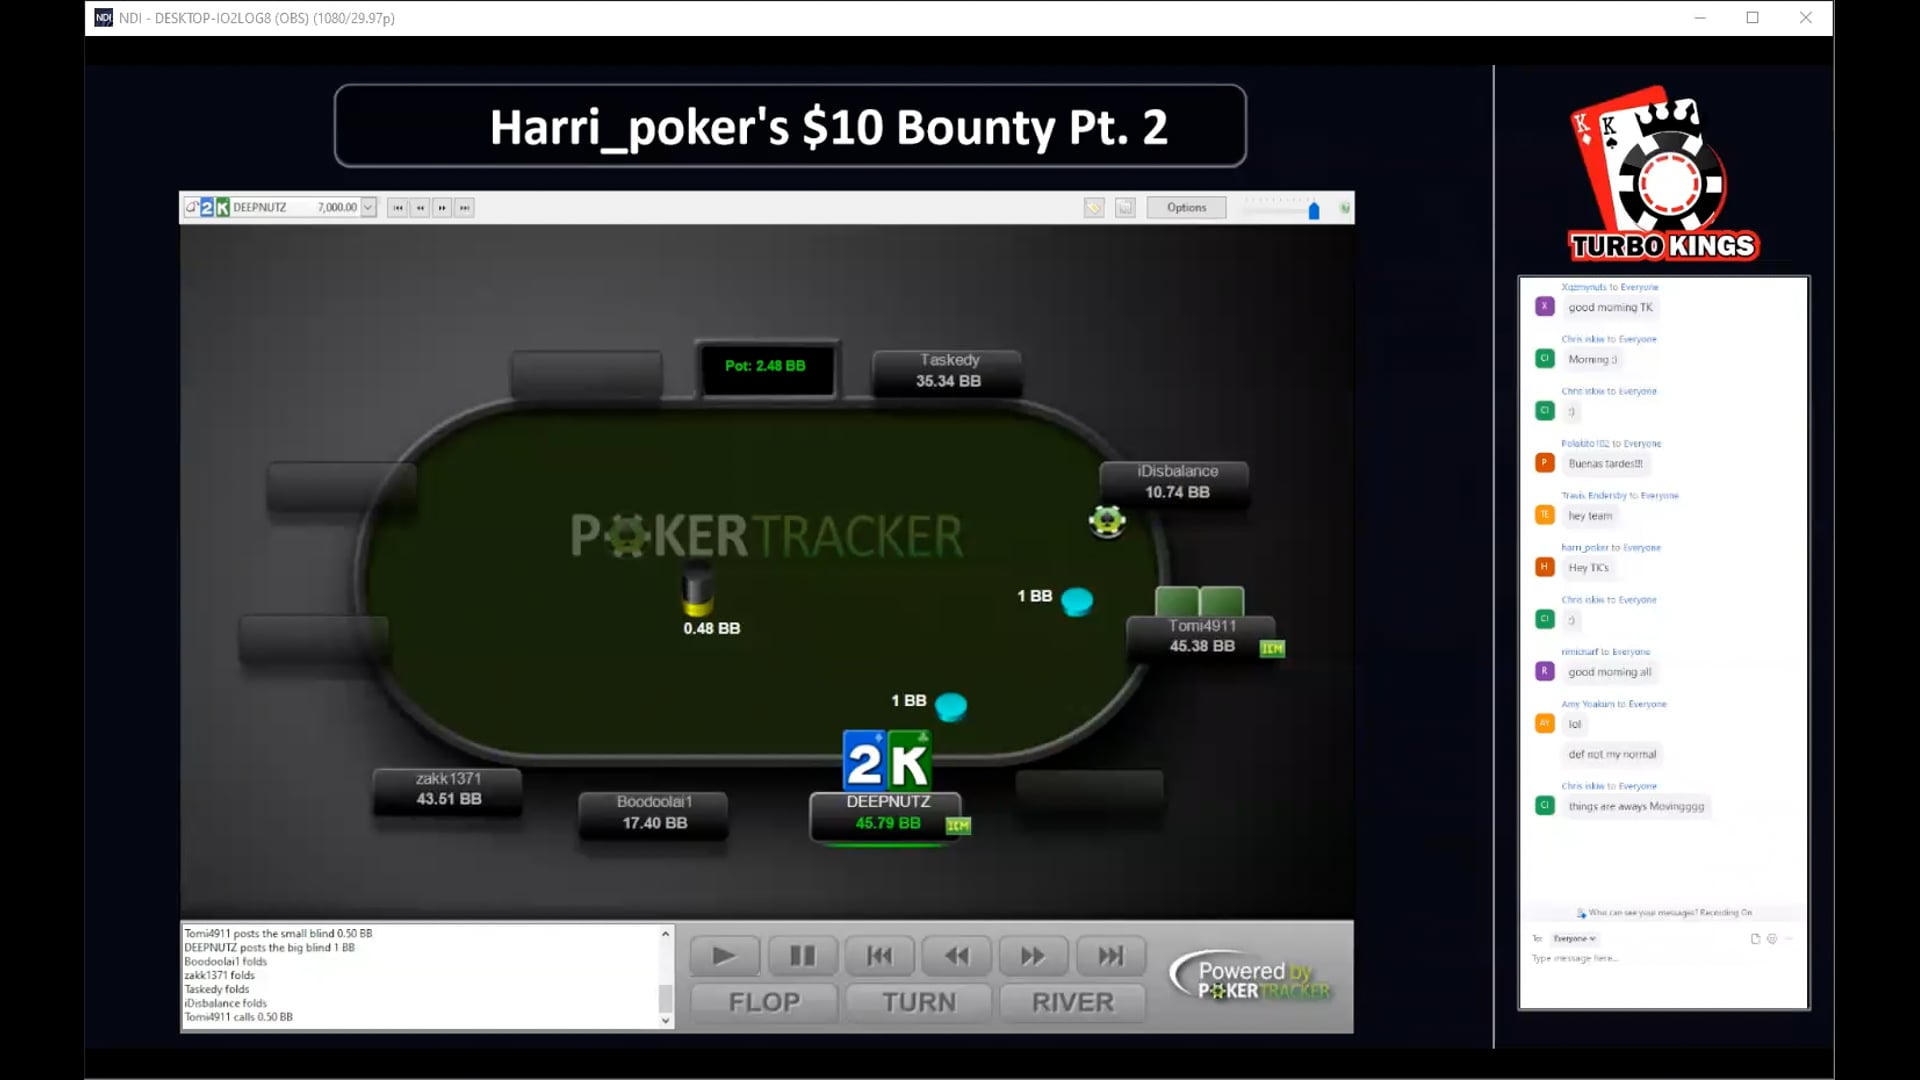 2022_05_11 - Brian - Harri_poker's $10 Bounty pt 2